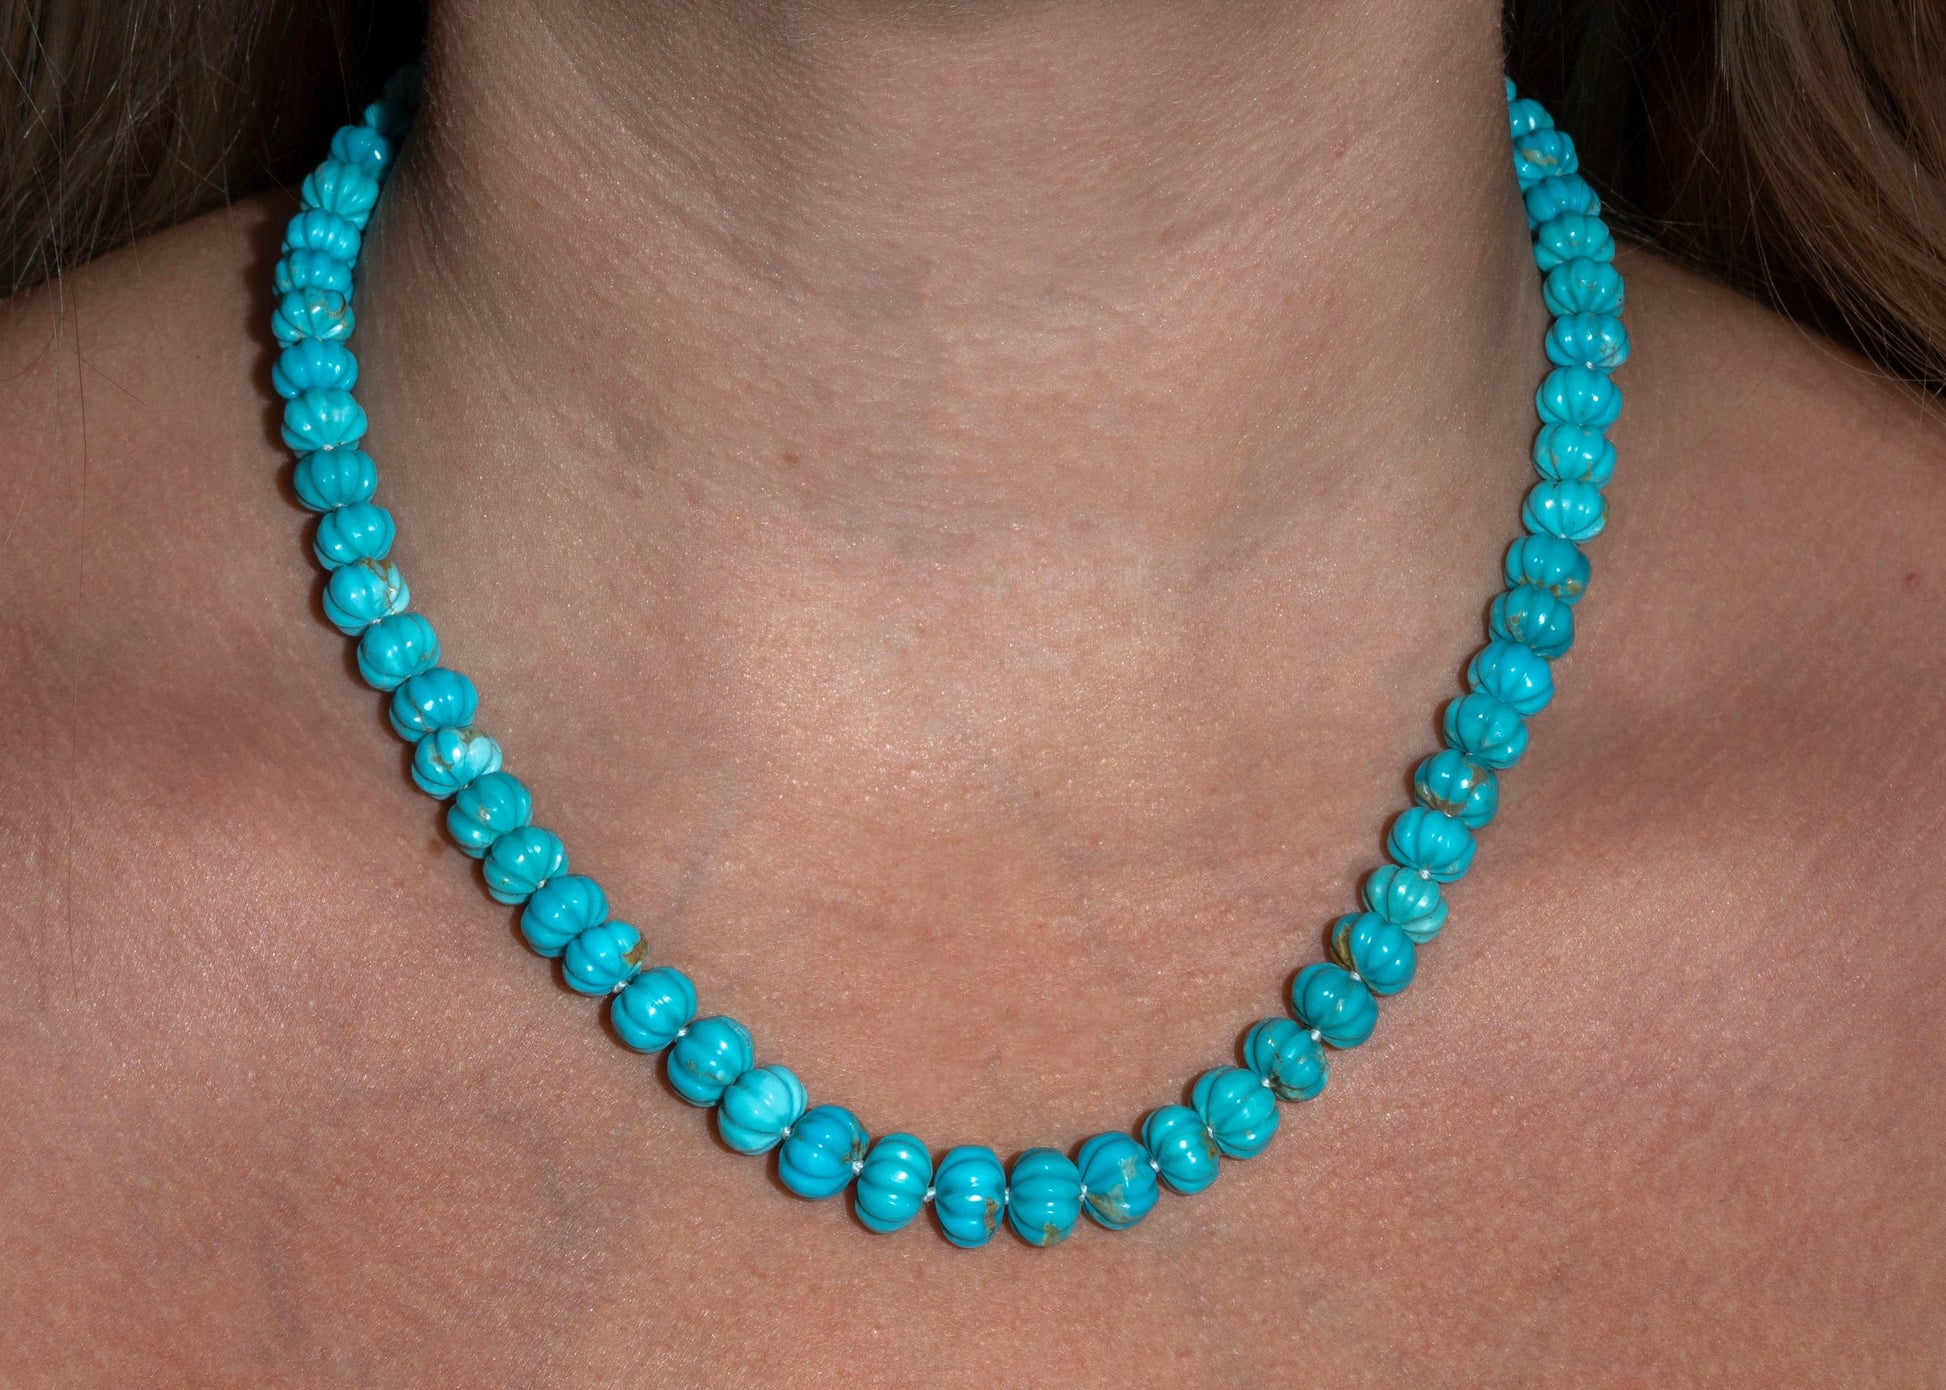 Beaded Candy Necklace - Aquamarine by Irene Neuwirth